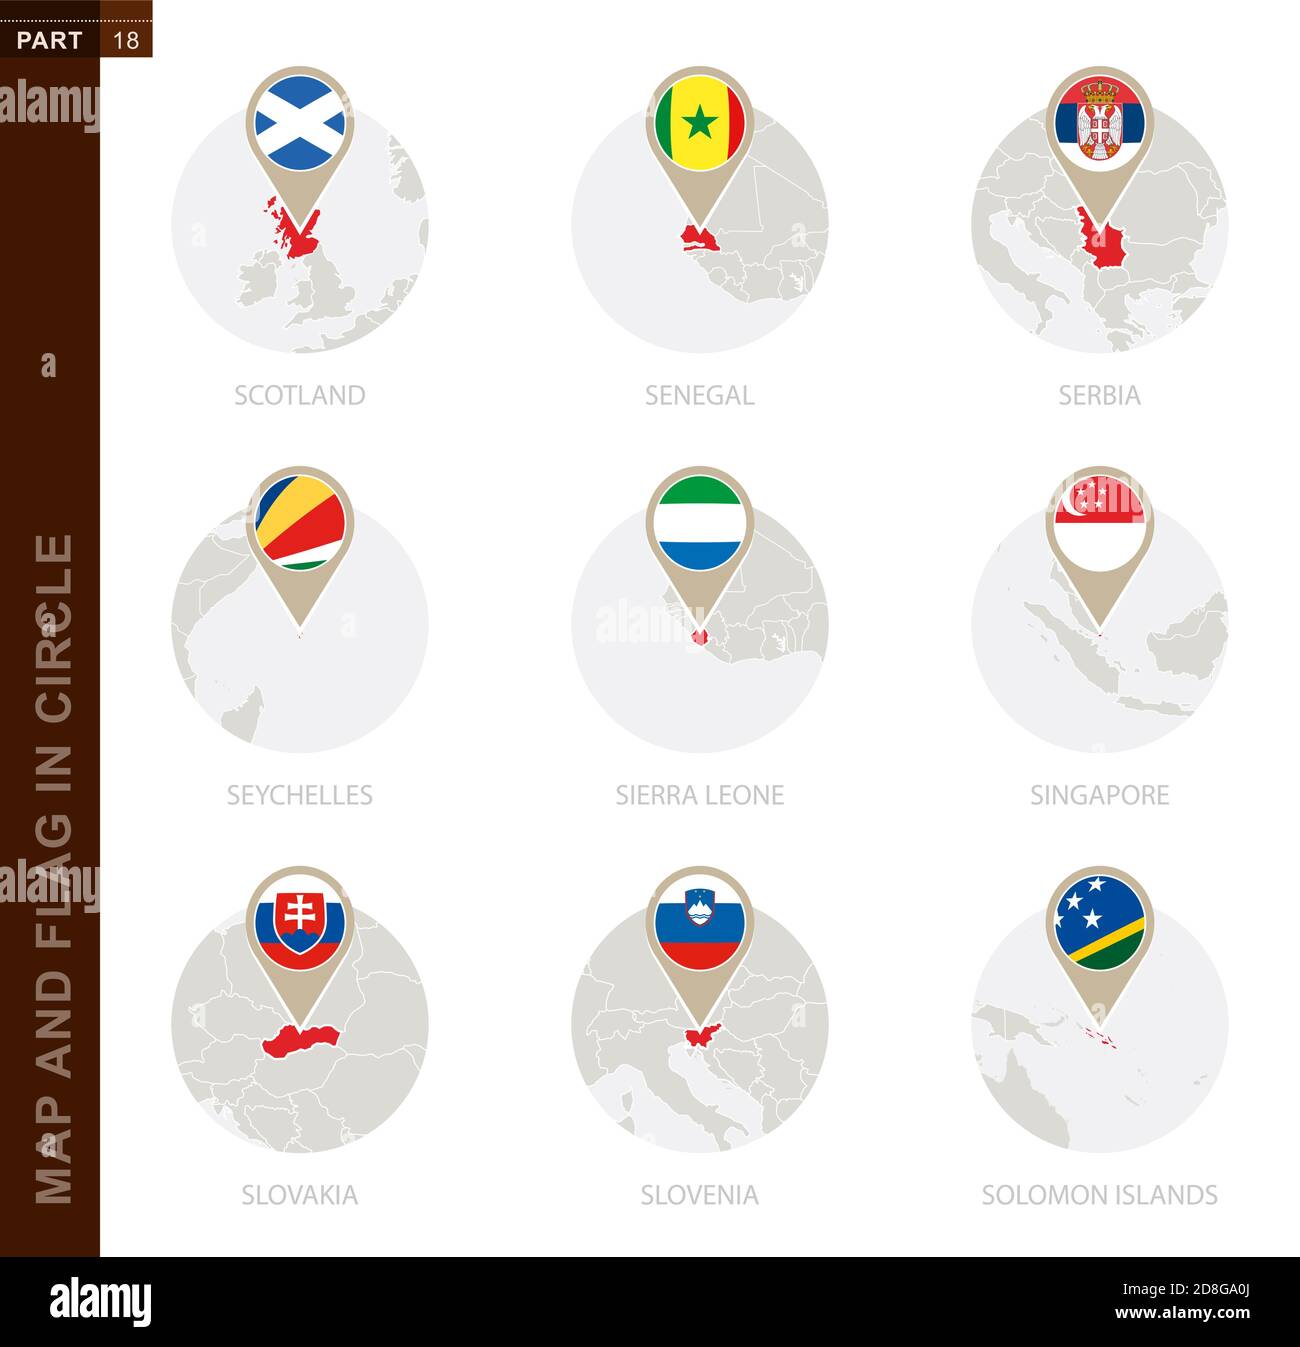 Map and Flag in a circle of 9 Countries: Scotland, Senegal, Serbia, Seychelles, Sierra Leone, Singapore, Slovakia, Slovenia, Solomon Islands Stock Vector